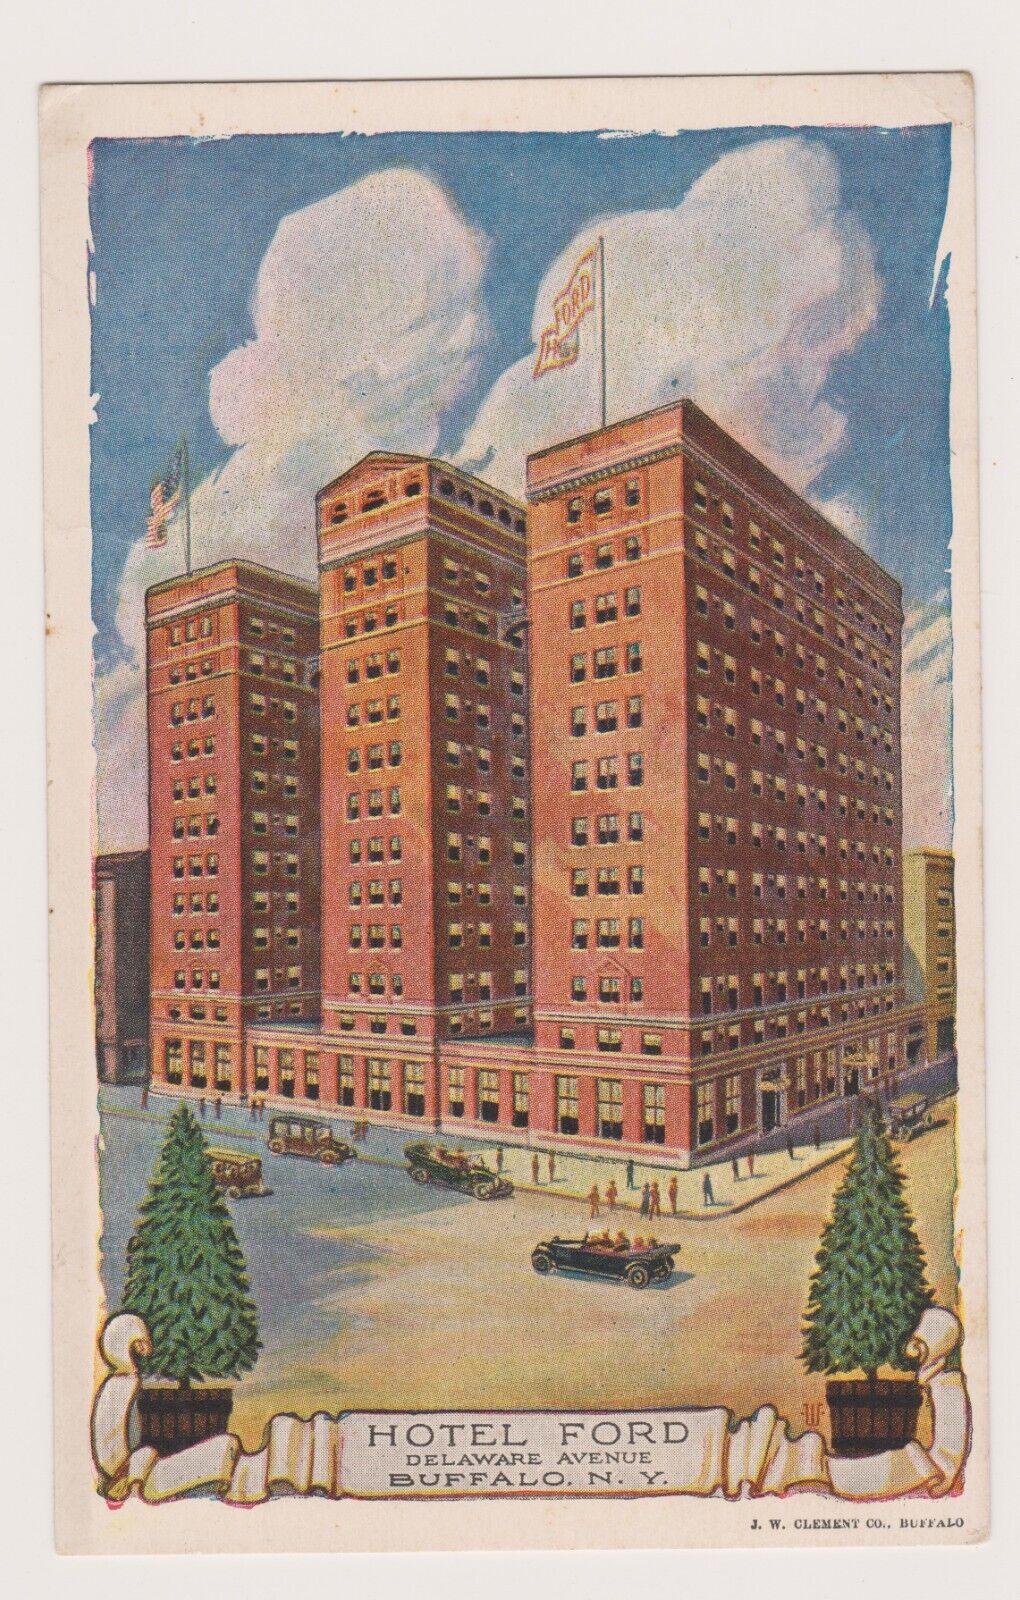 Vintage Postcard 1925 View Of Hotel Ford Delaware Avenue Buffalo New York JW Pub